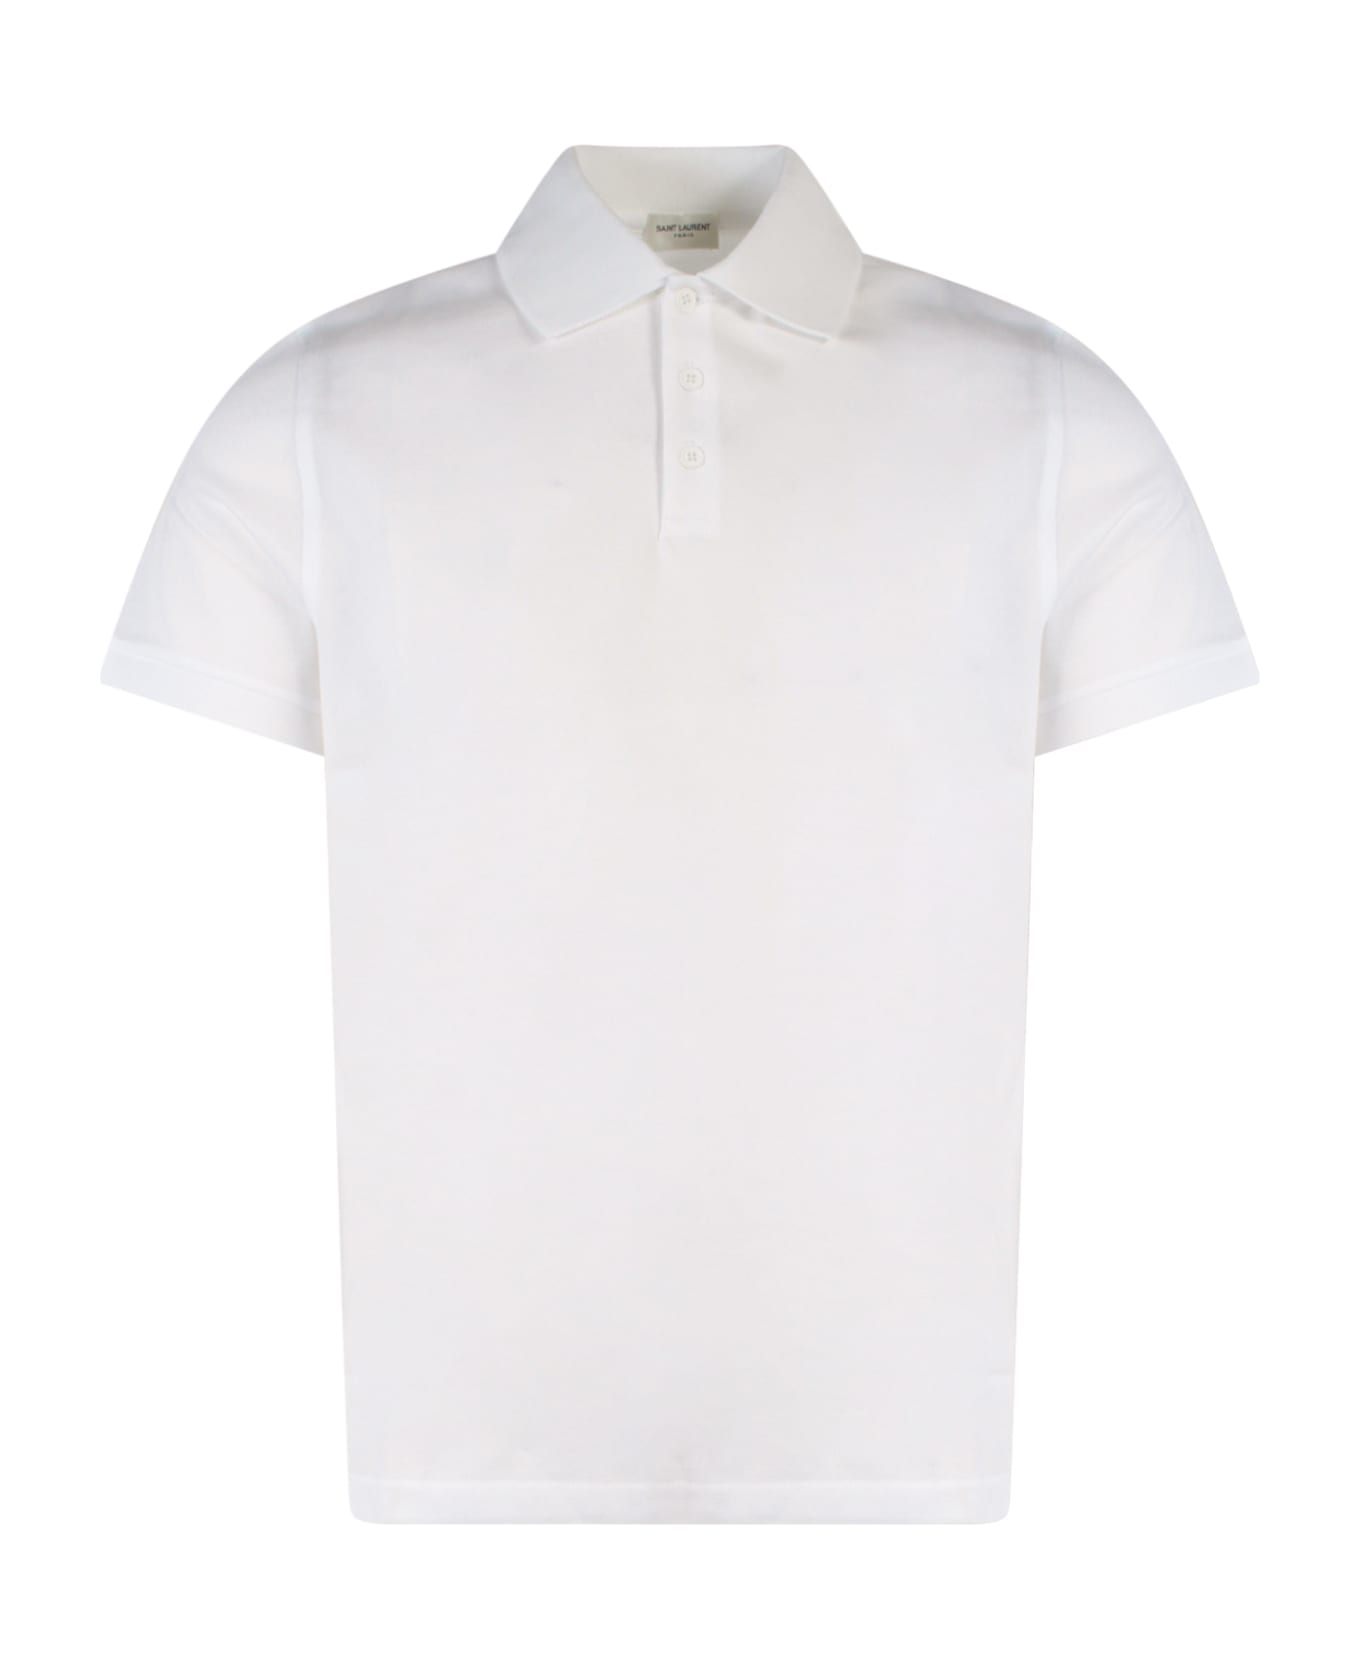 Saint Laurent Polo Shirt - White